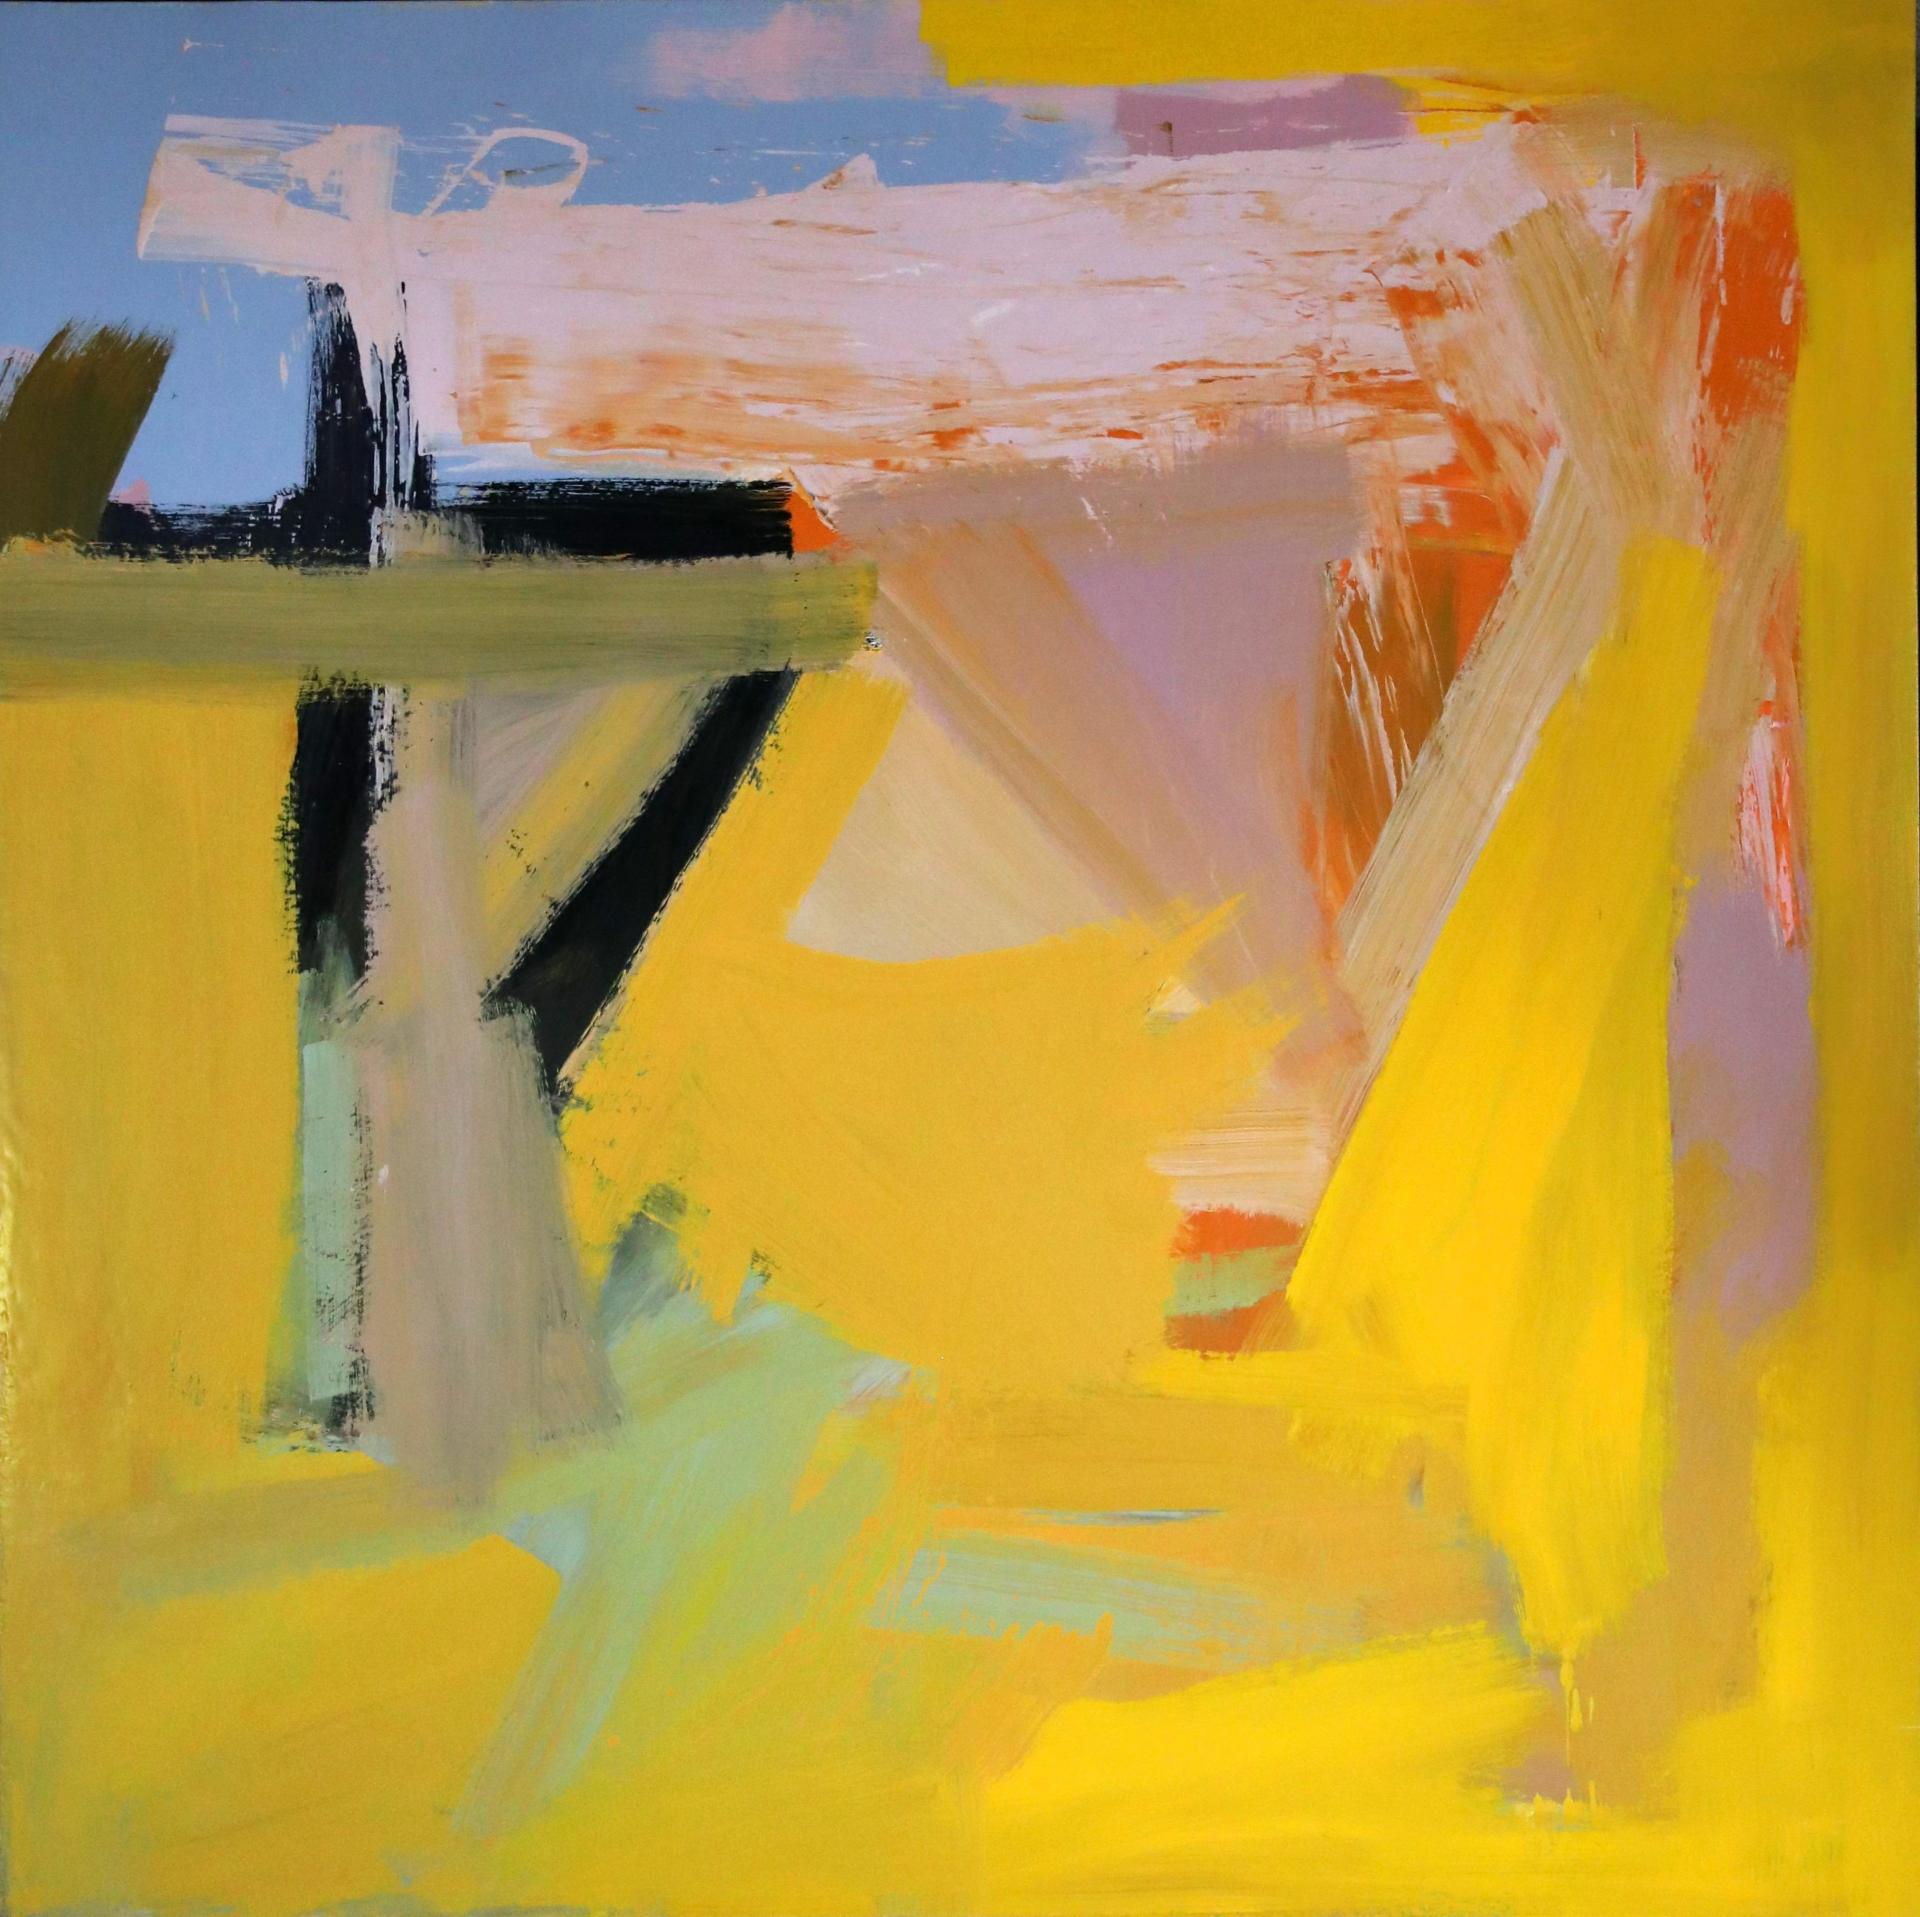 <em>Abstract No. 15</em> by James Vella Clark